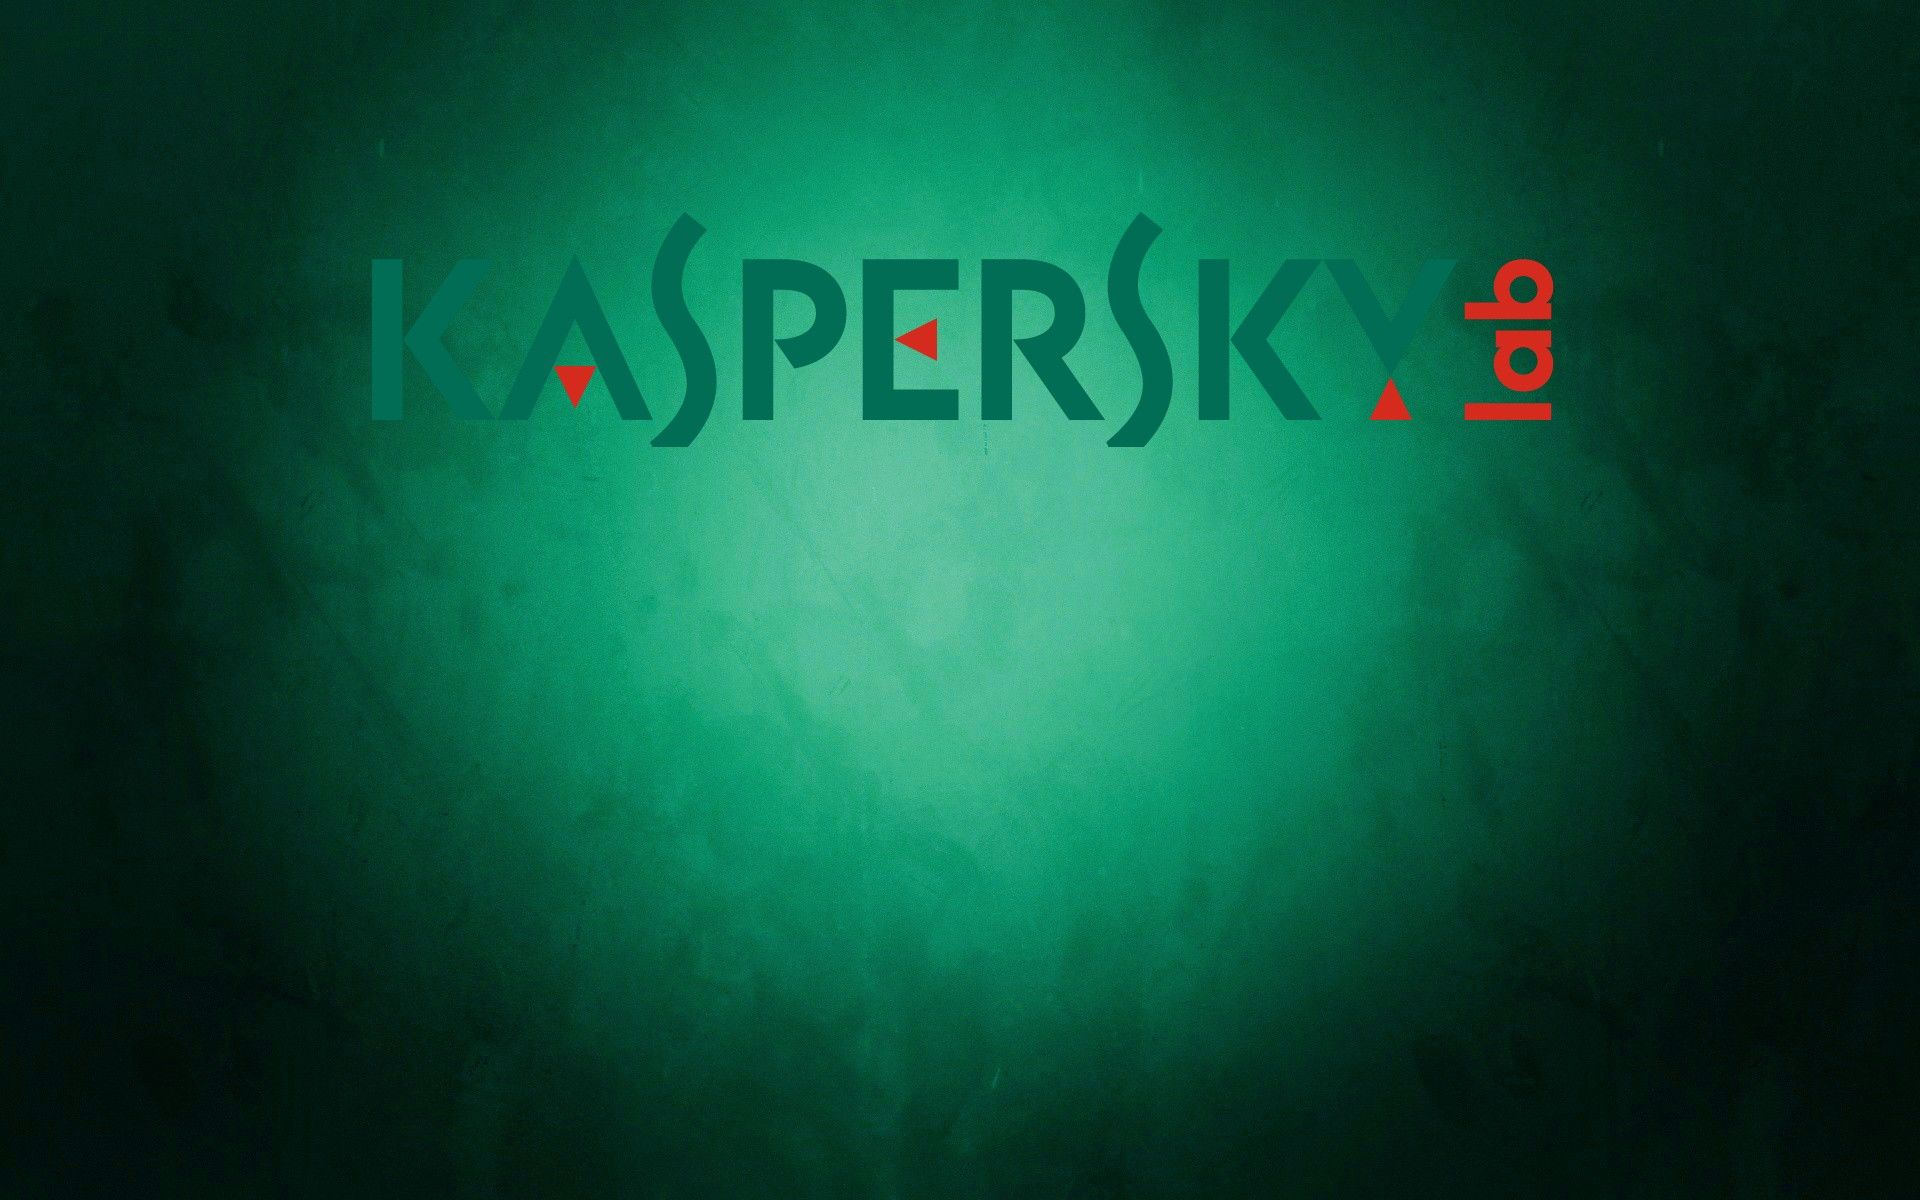  Kaspersky Security Scan a detectat infectii active pe computerele protejate